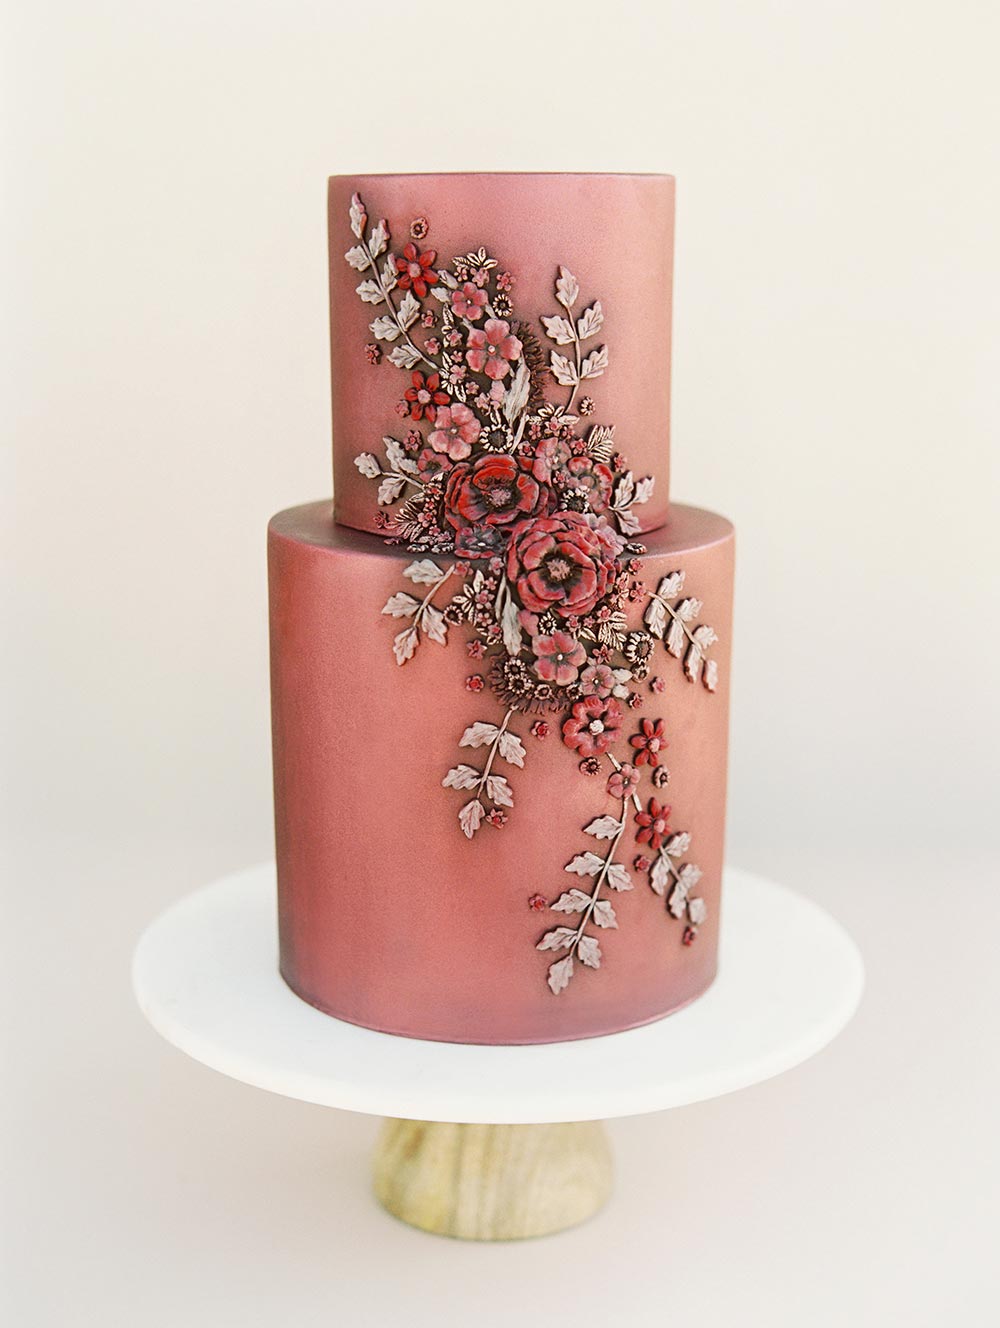 metallic burgundy wedding cake with sugar flowers